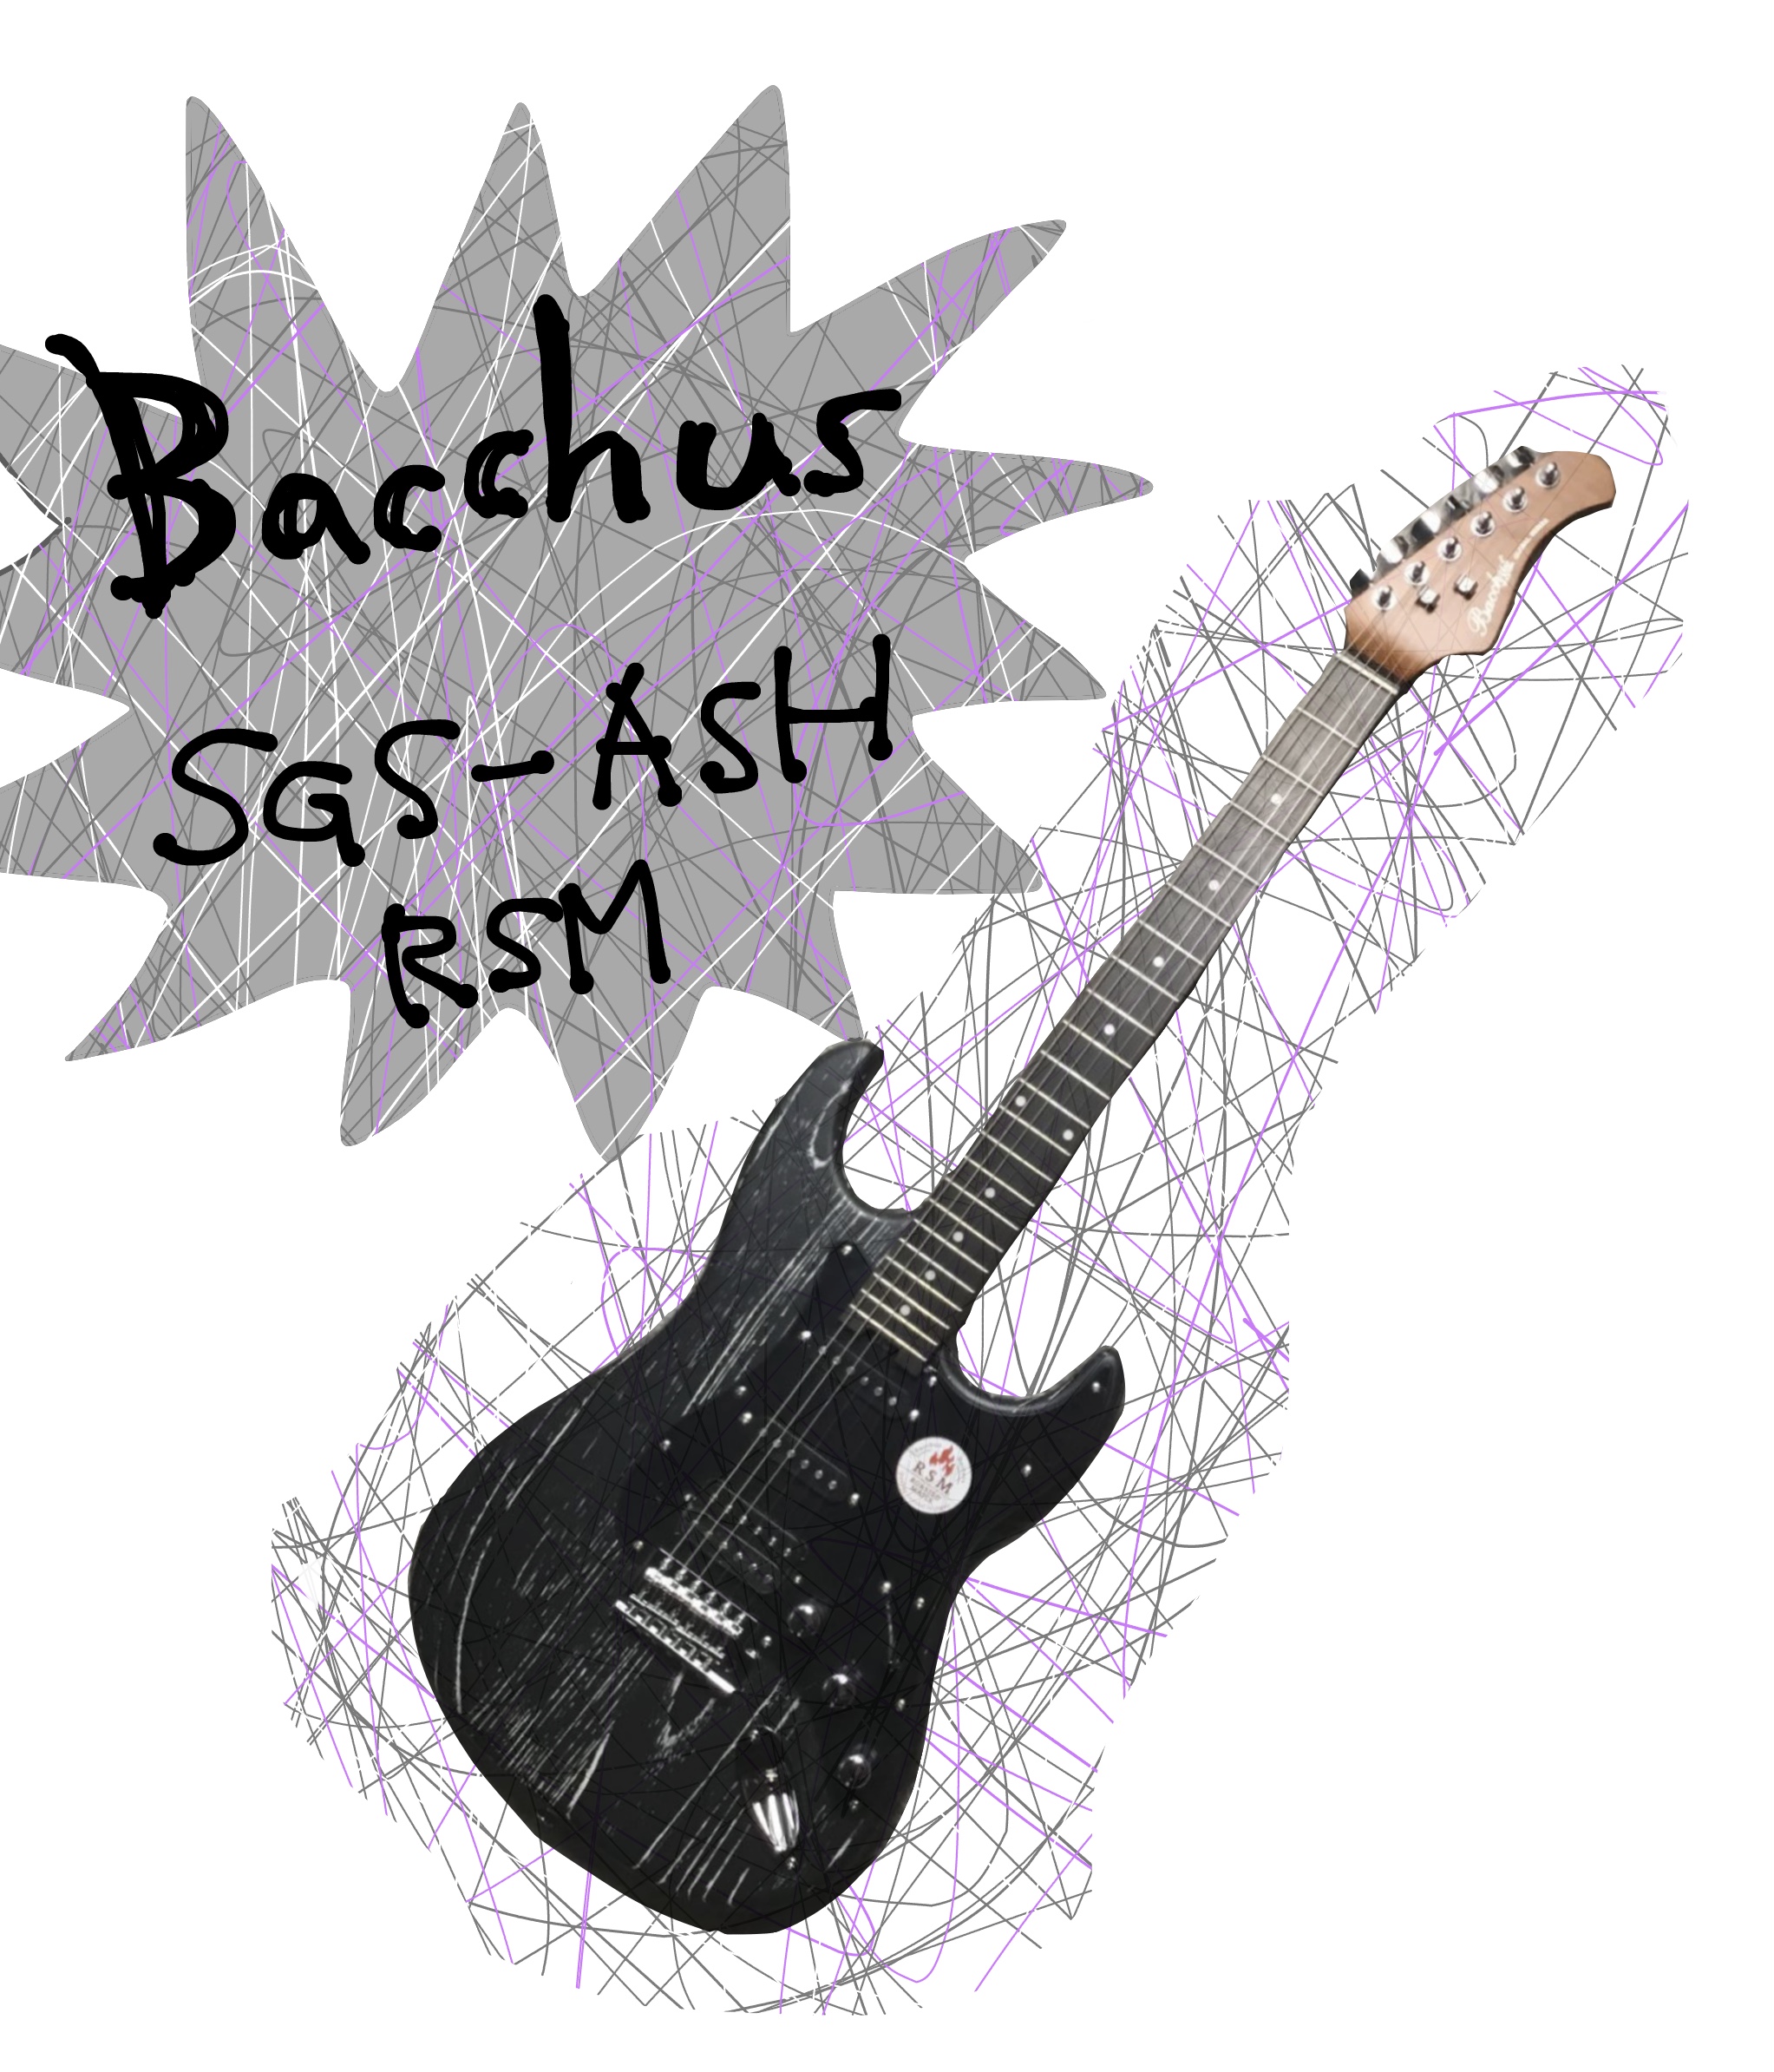 Bacchus(バッカス)SGS-ASH RSM